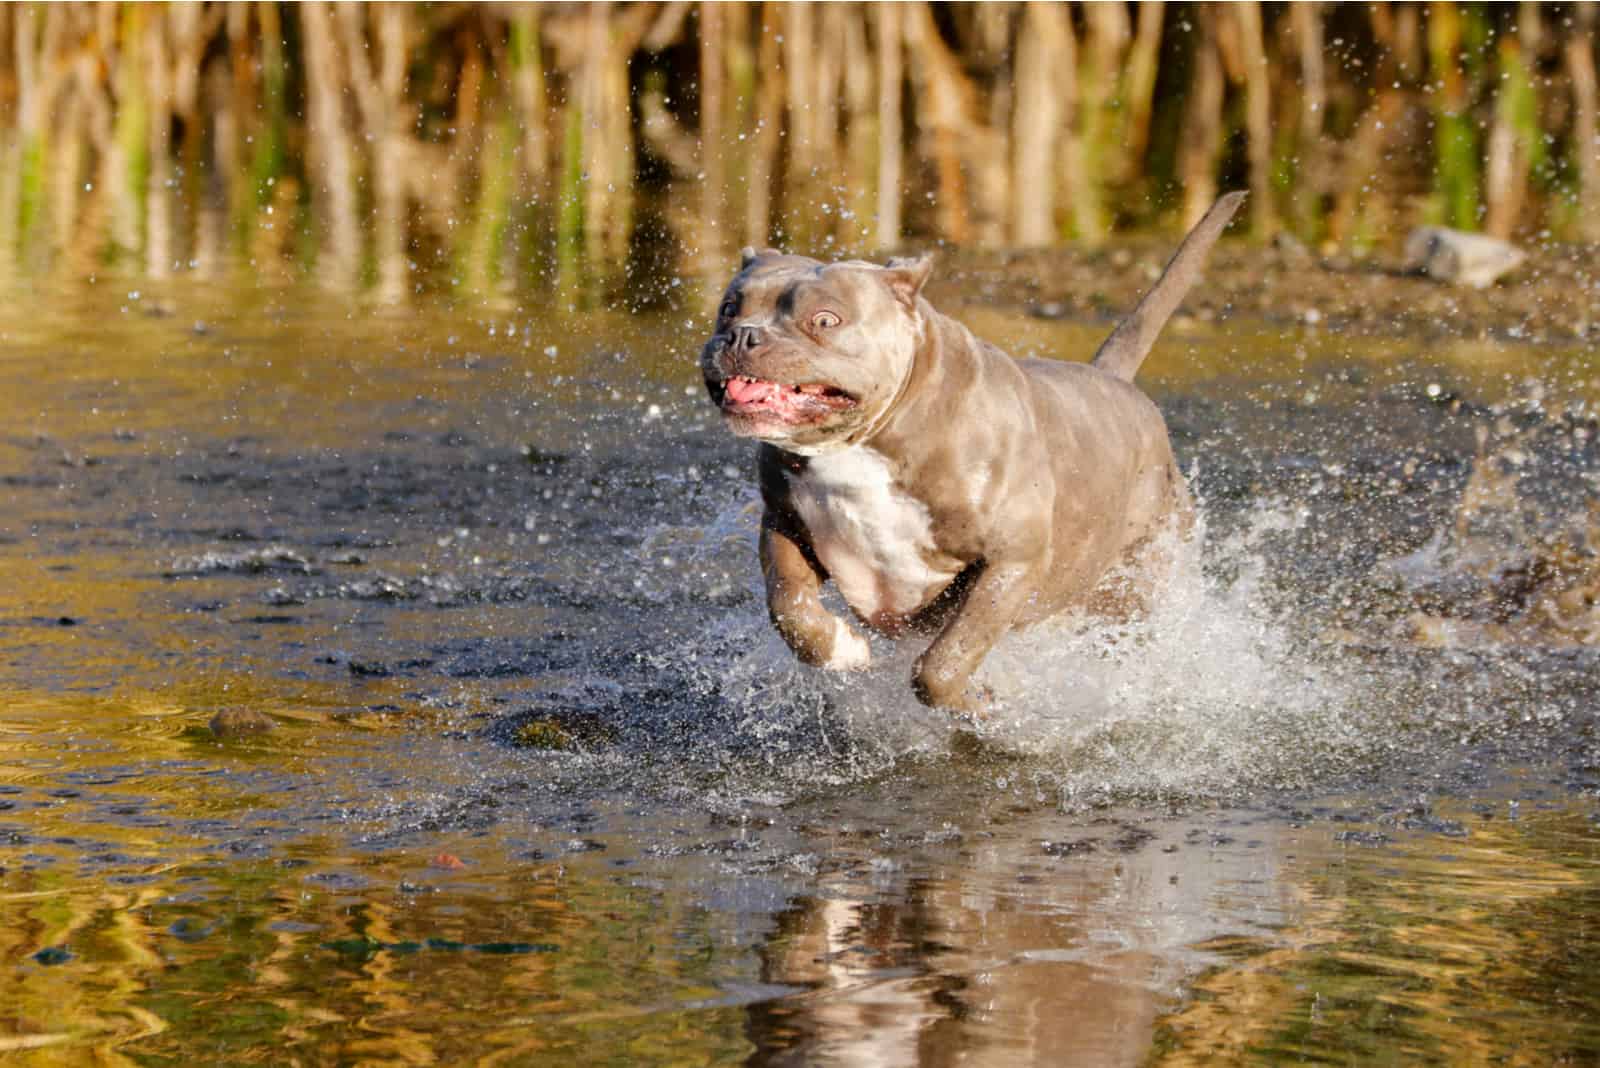 Pitbull, bulldog mixed dog running through the water